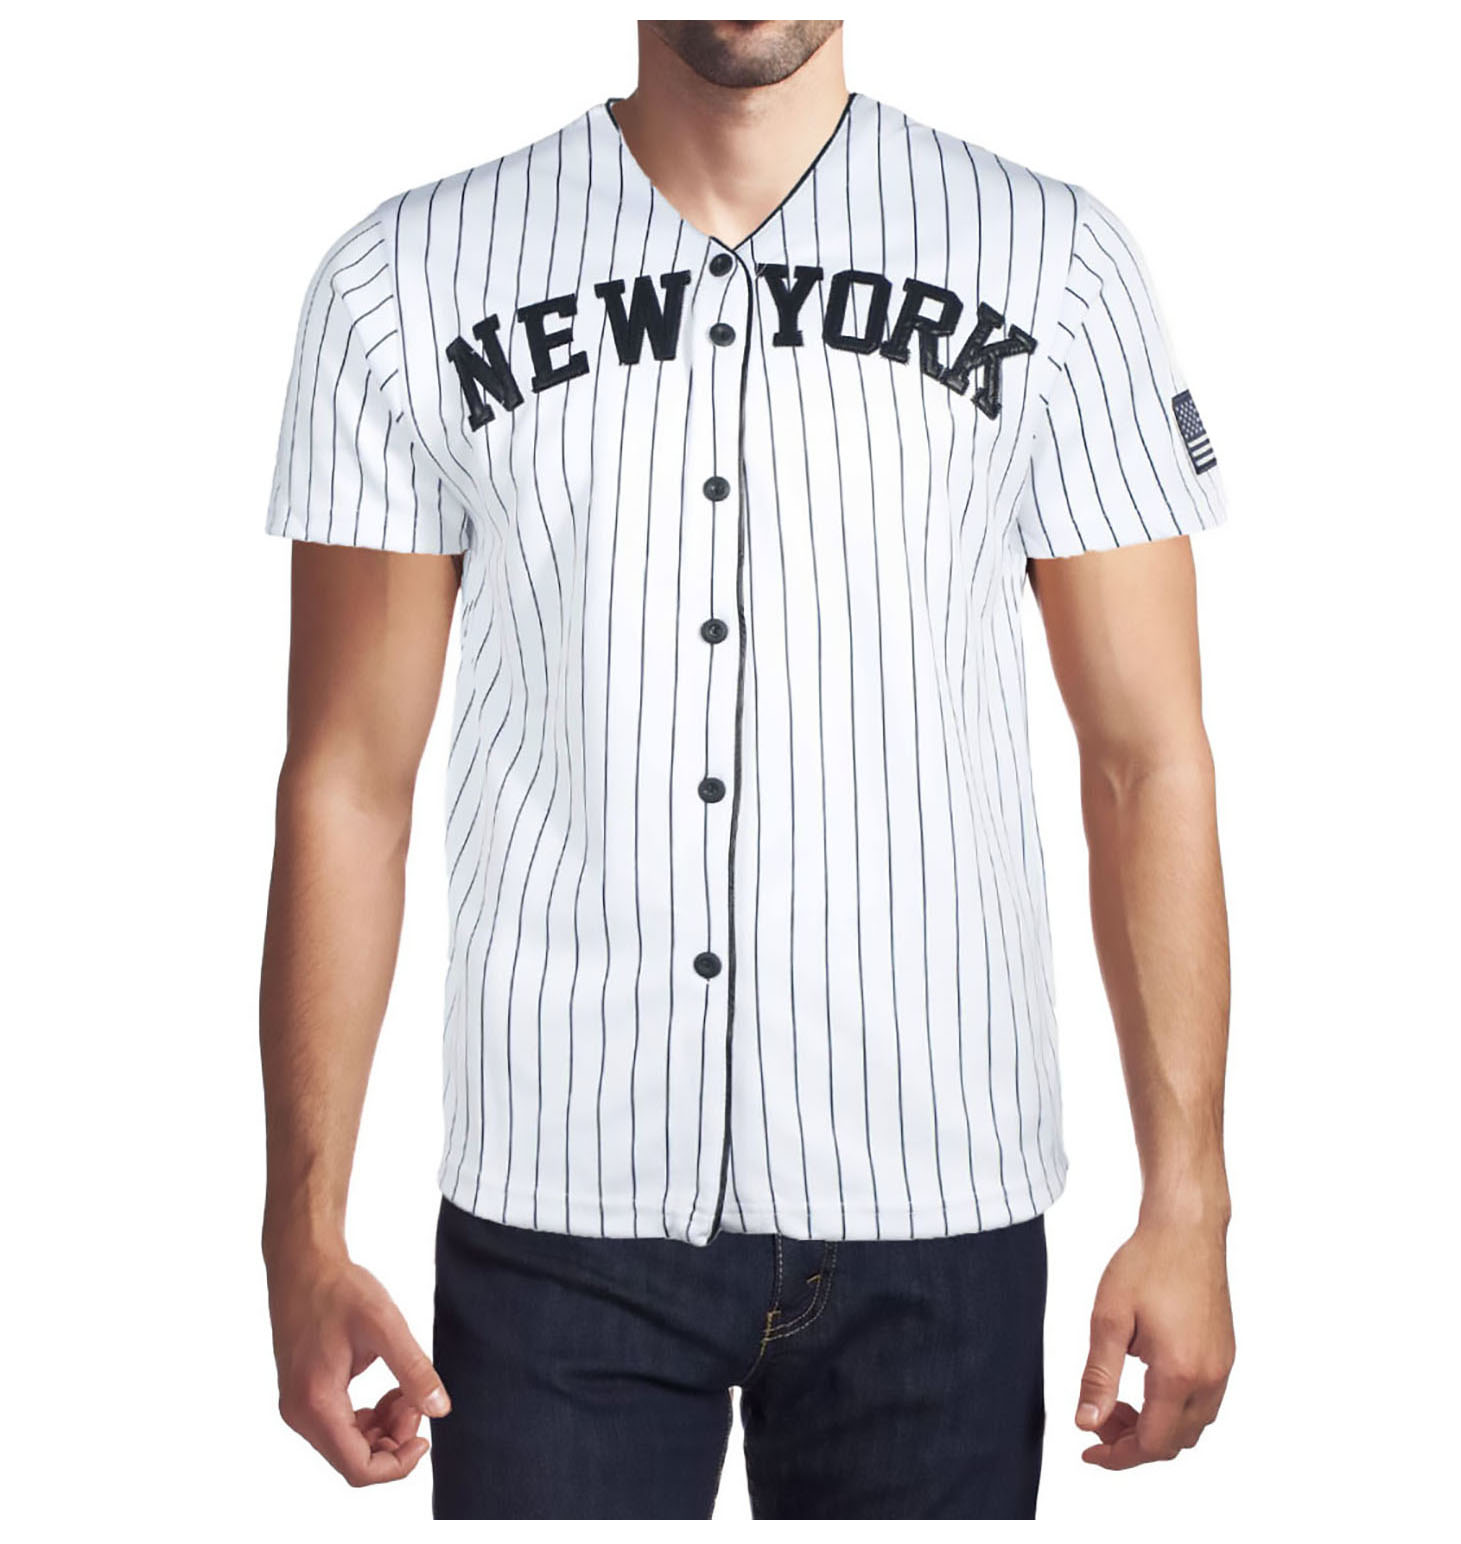 True Rock Men's New York Slim Fit Pinstripe Baseball Jersey (Navy/White, Small)